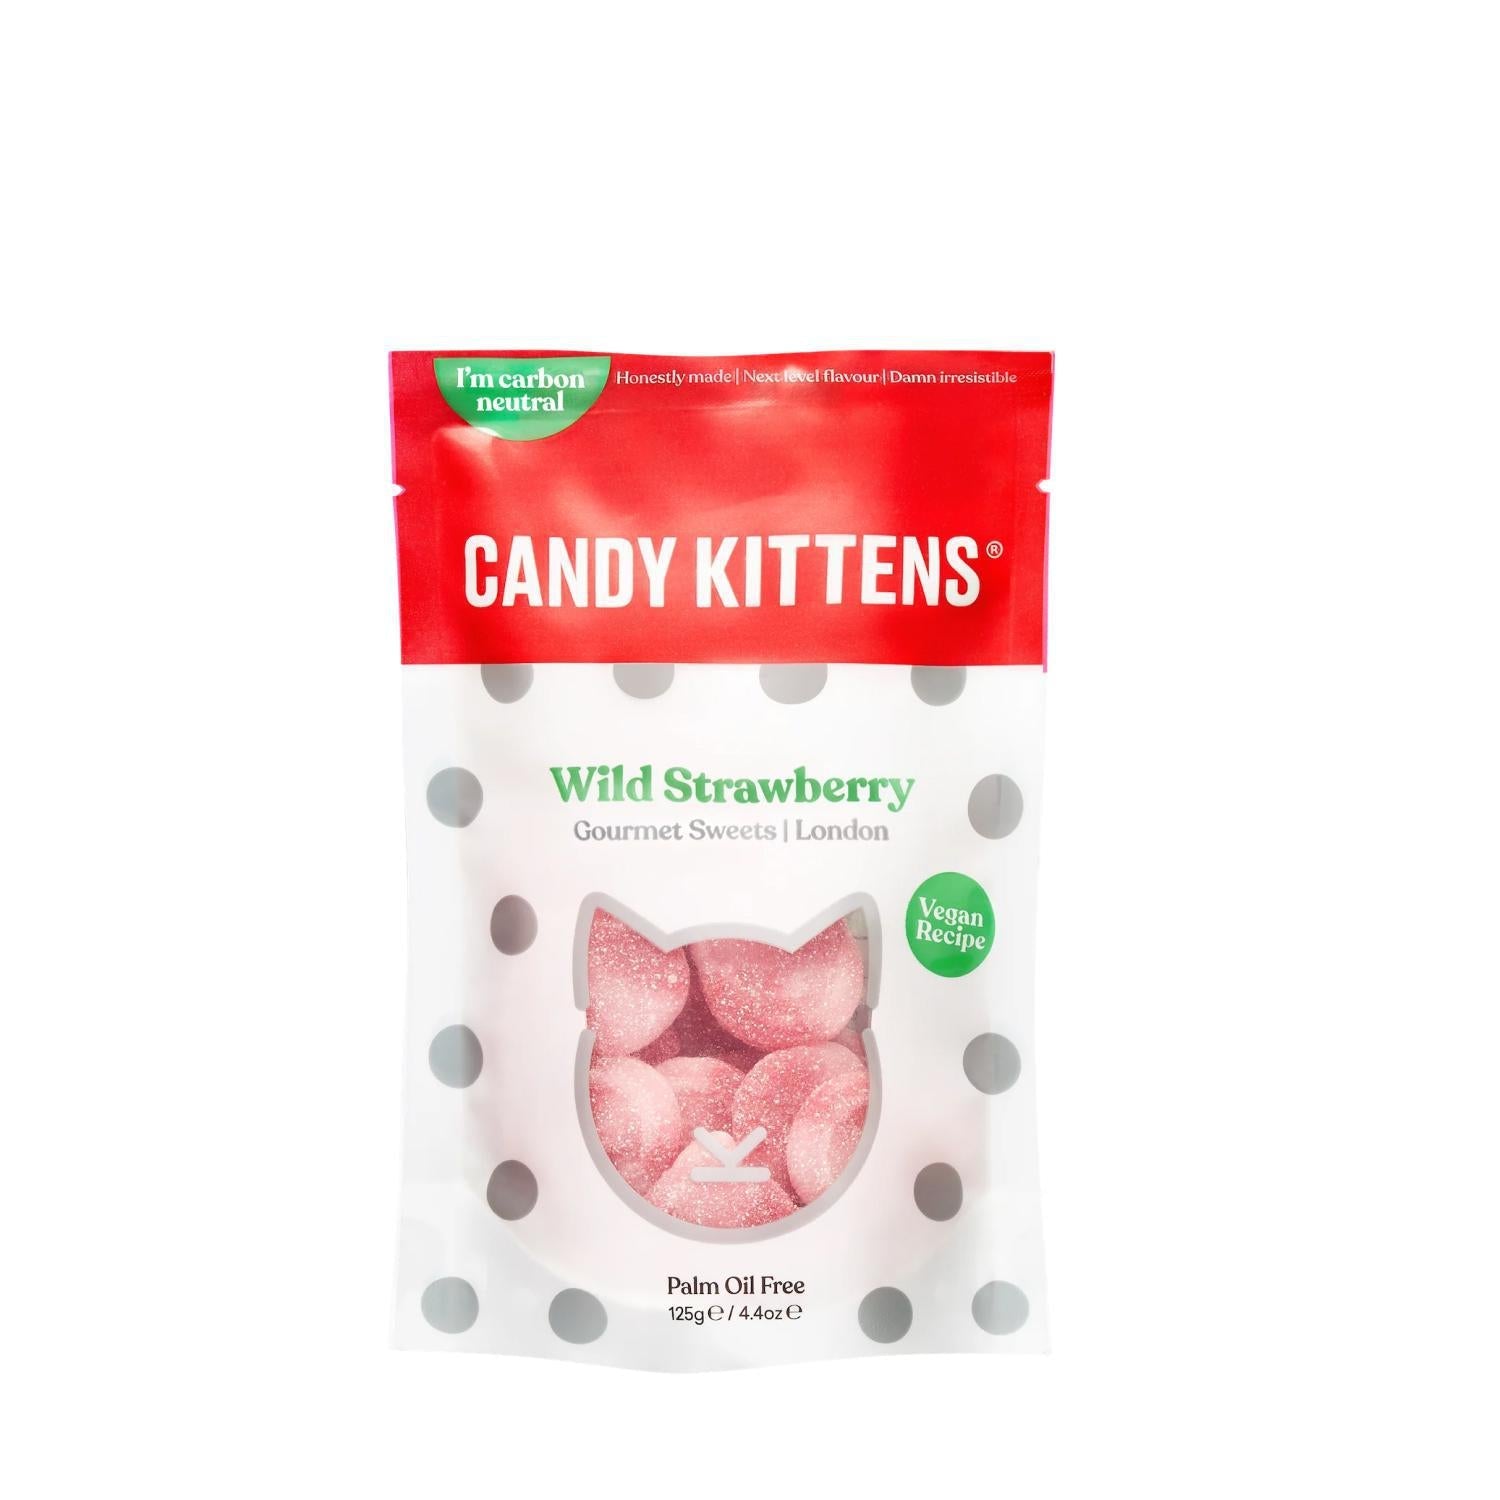 Candy Kittens - Wild Strawberry